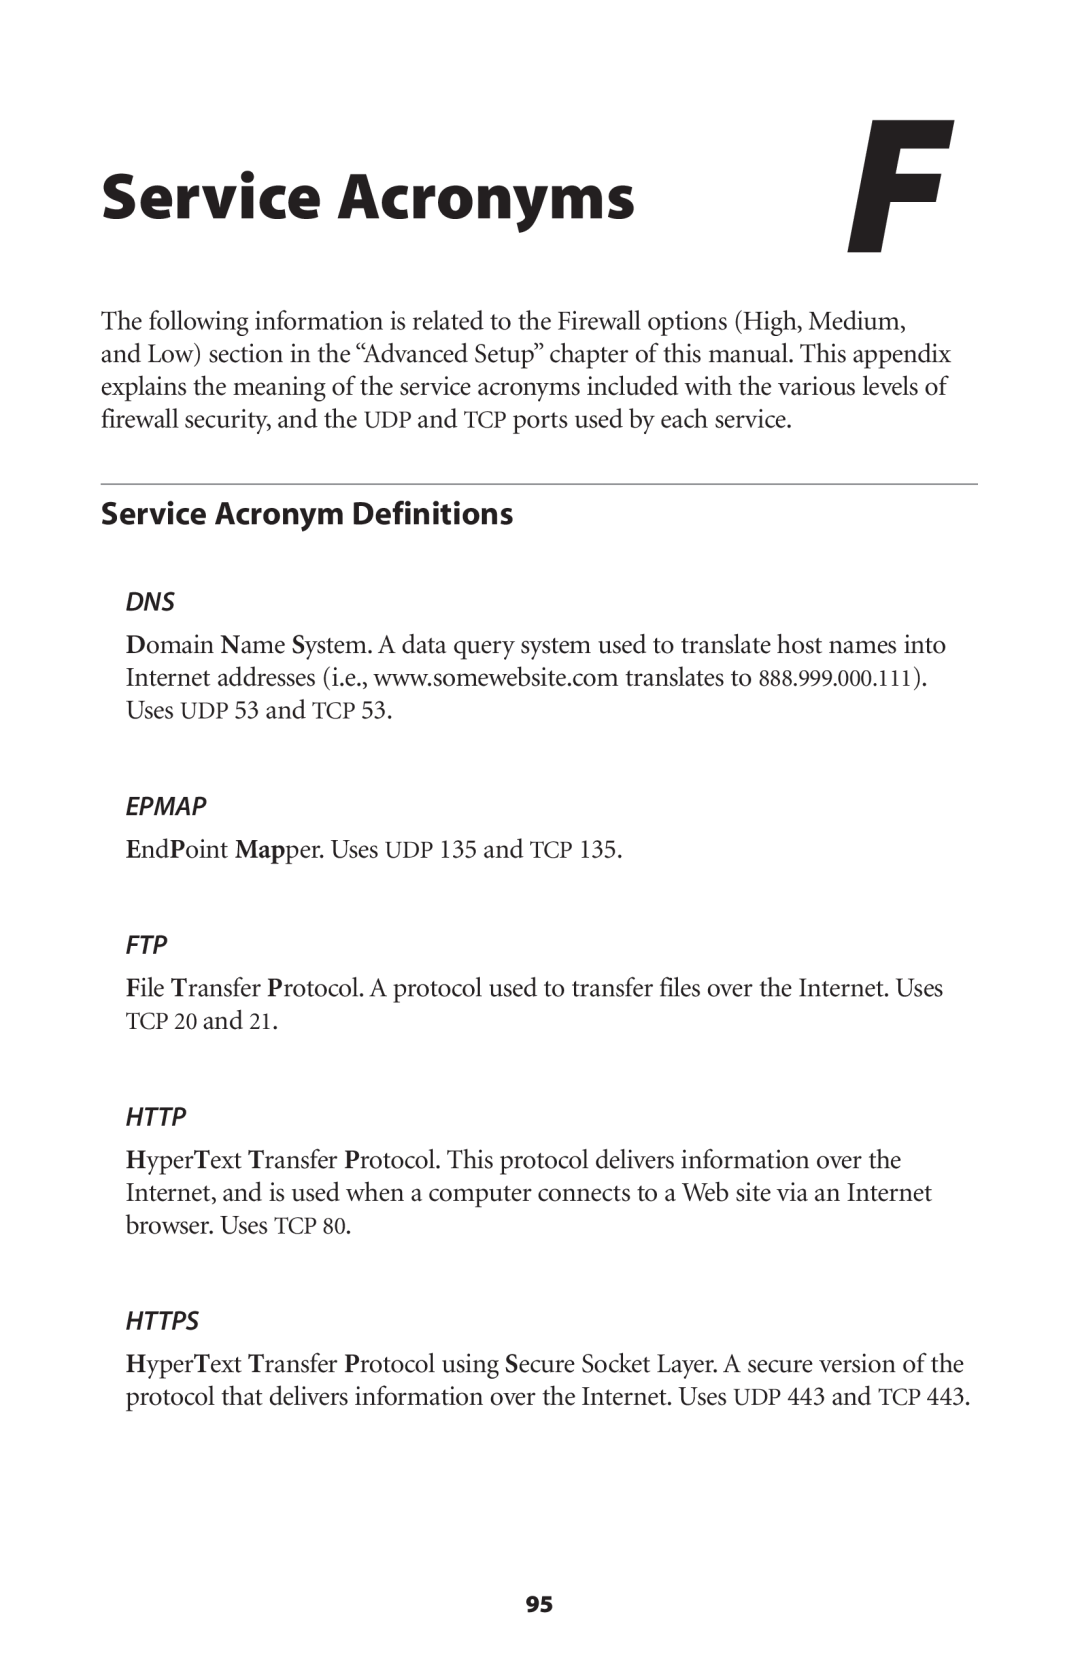 Verizon GT701C user manual Service Acronyms, Service Acronym Definitions, Epmap, Https 